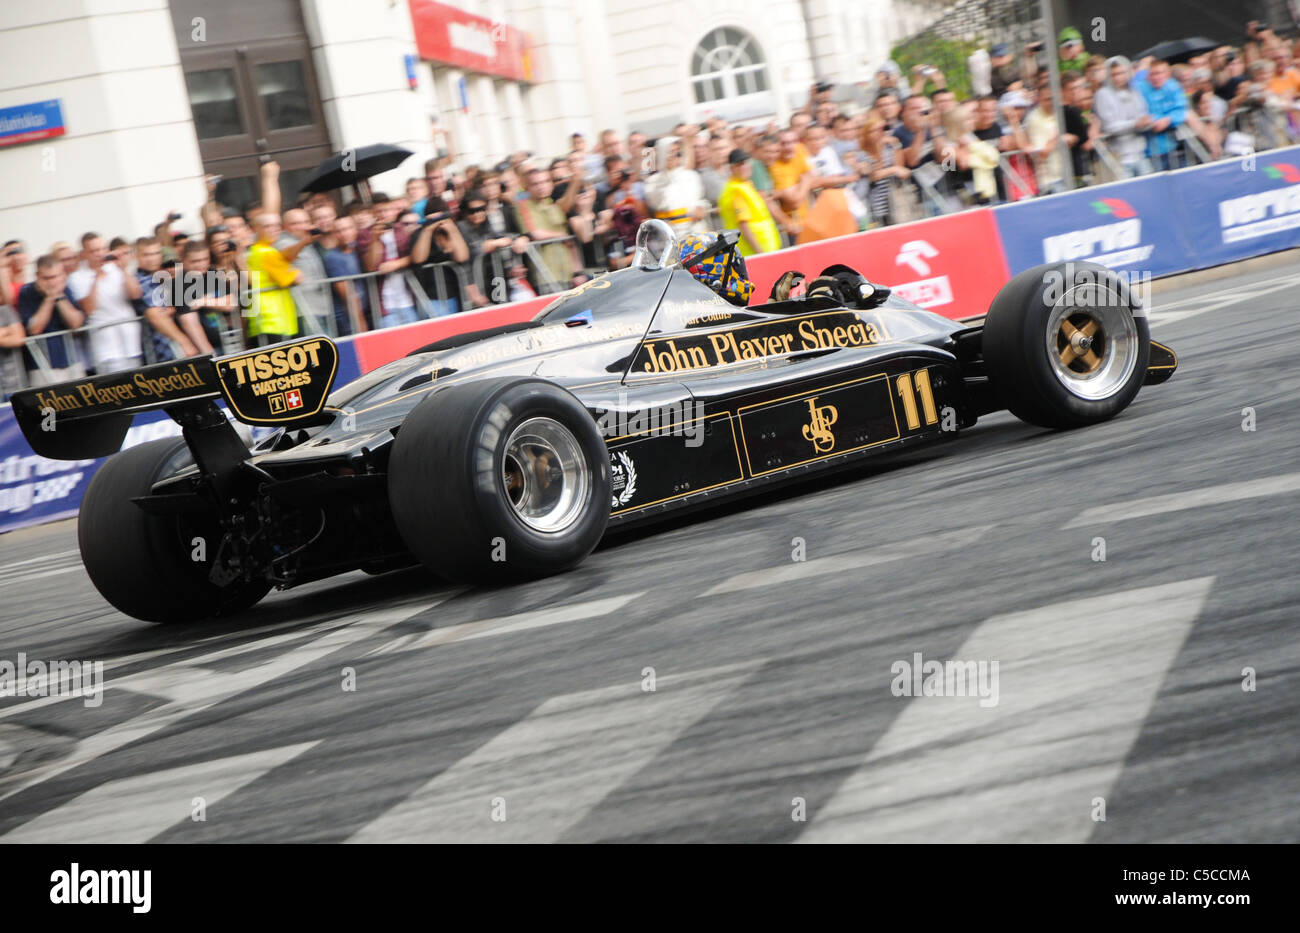 18.06.2011 Warsaw, Poland: Legendary Formula One racing car Lotus 91 during VERVA Street Racing Show Stock Photo